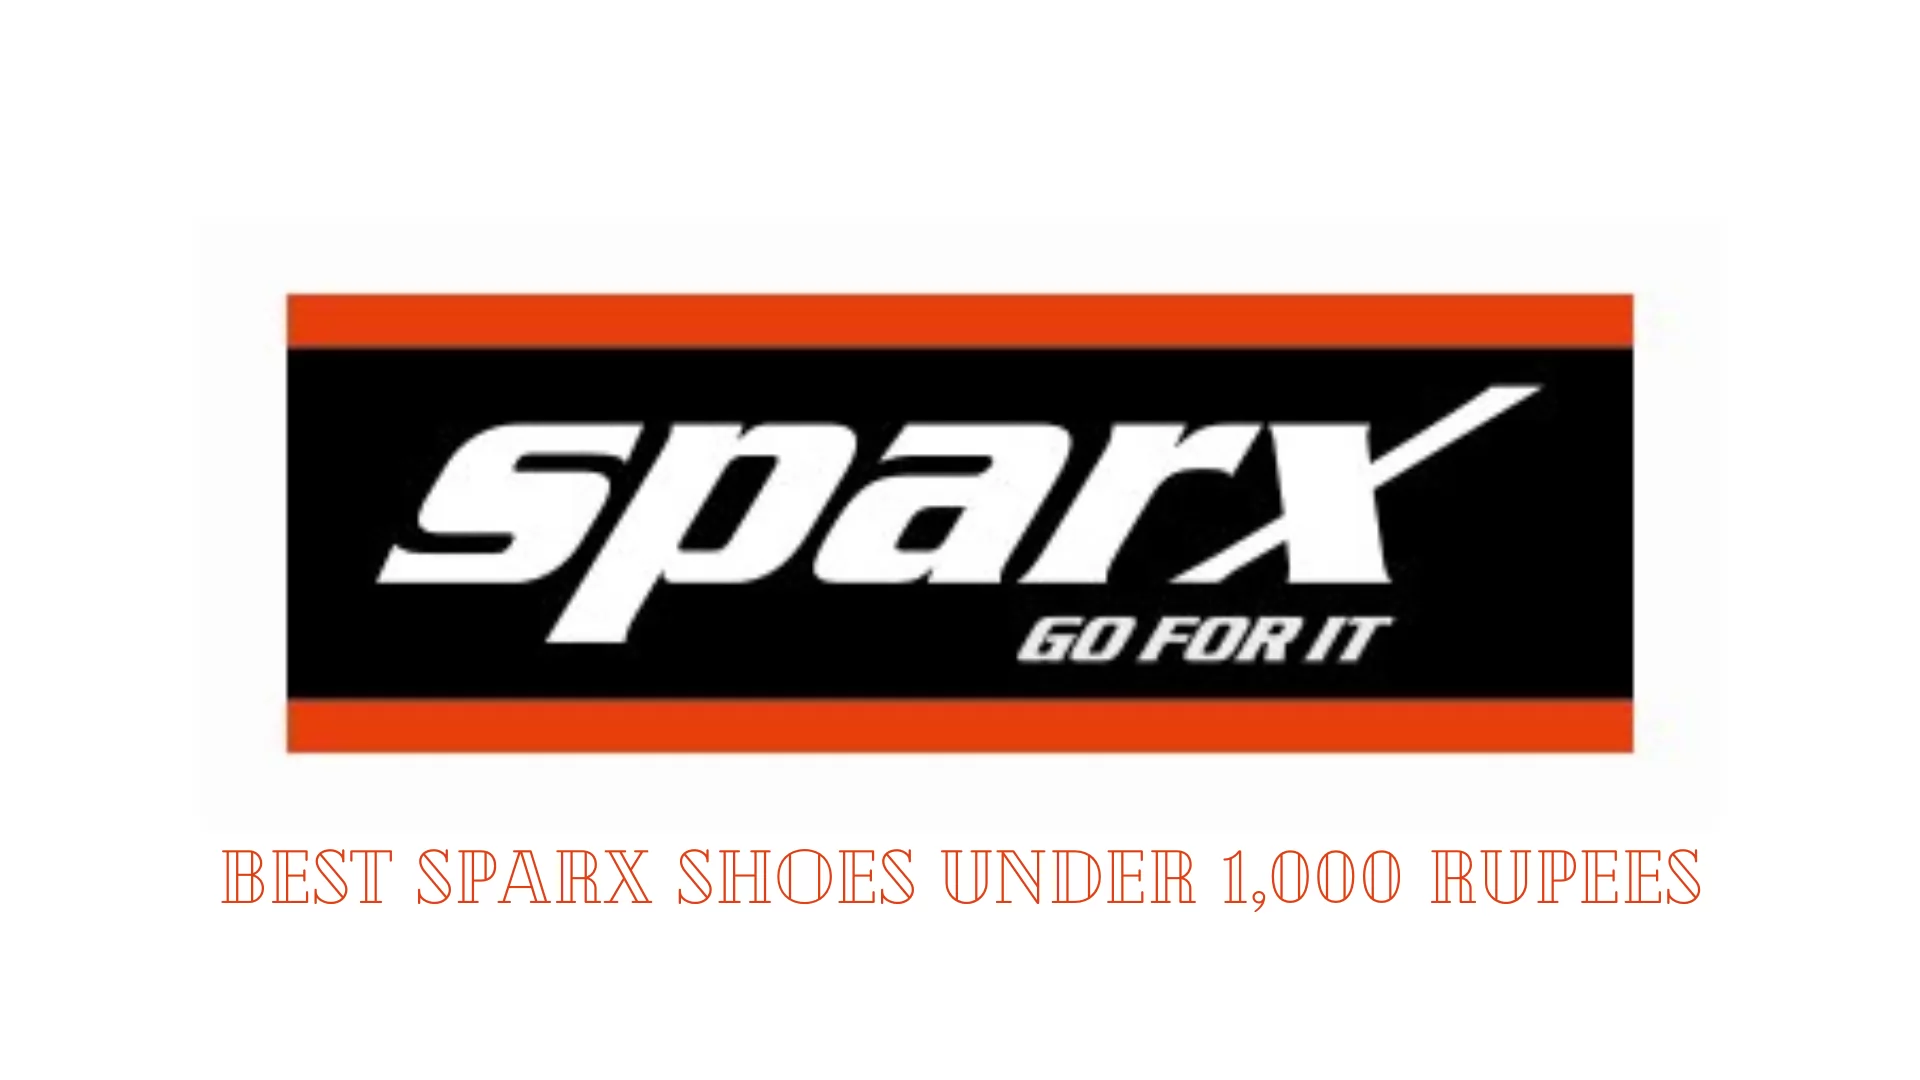 Best Sparx Shoes Under 1000 Rupees